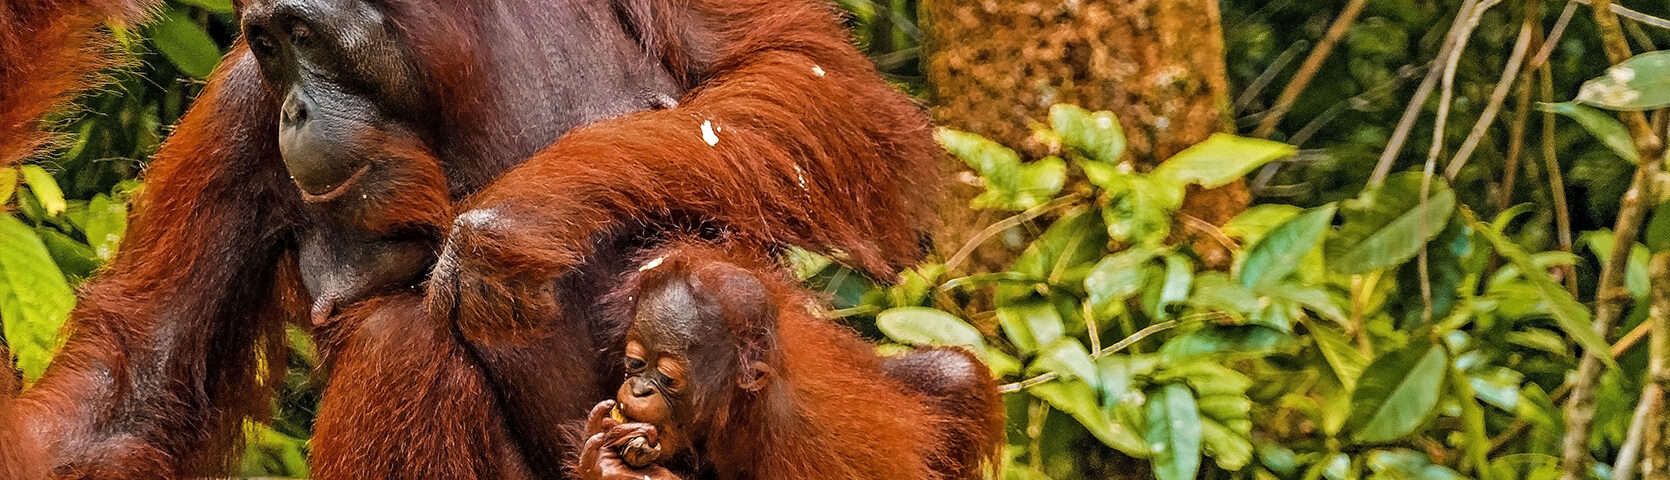 Orangutans - Makassar to Singapore